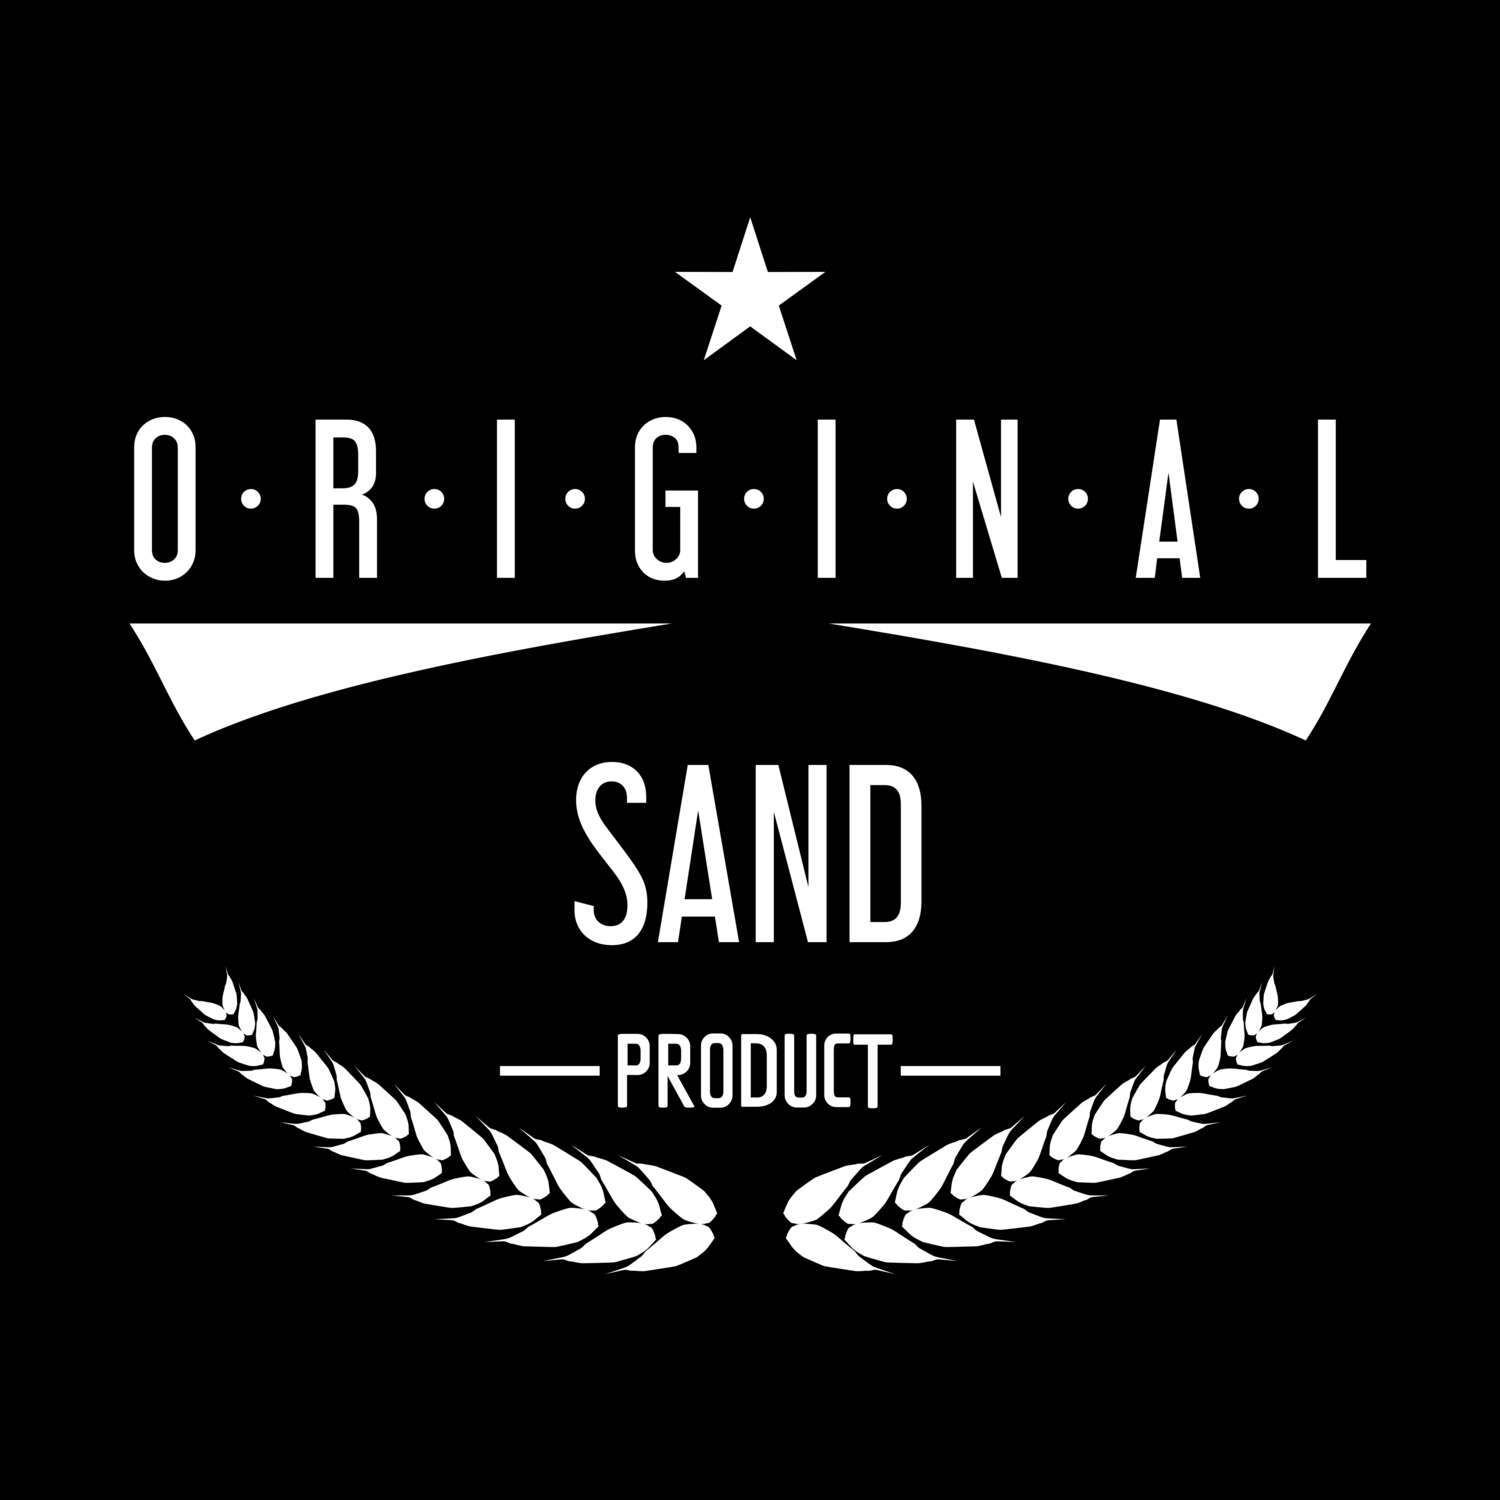 Sand T-Shirt »Original Product«